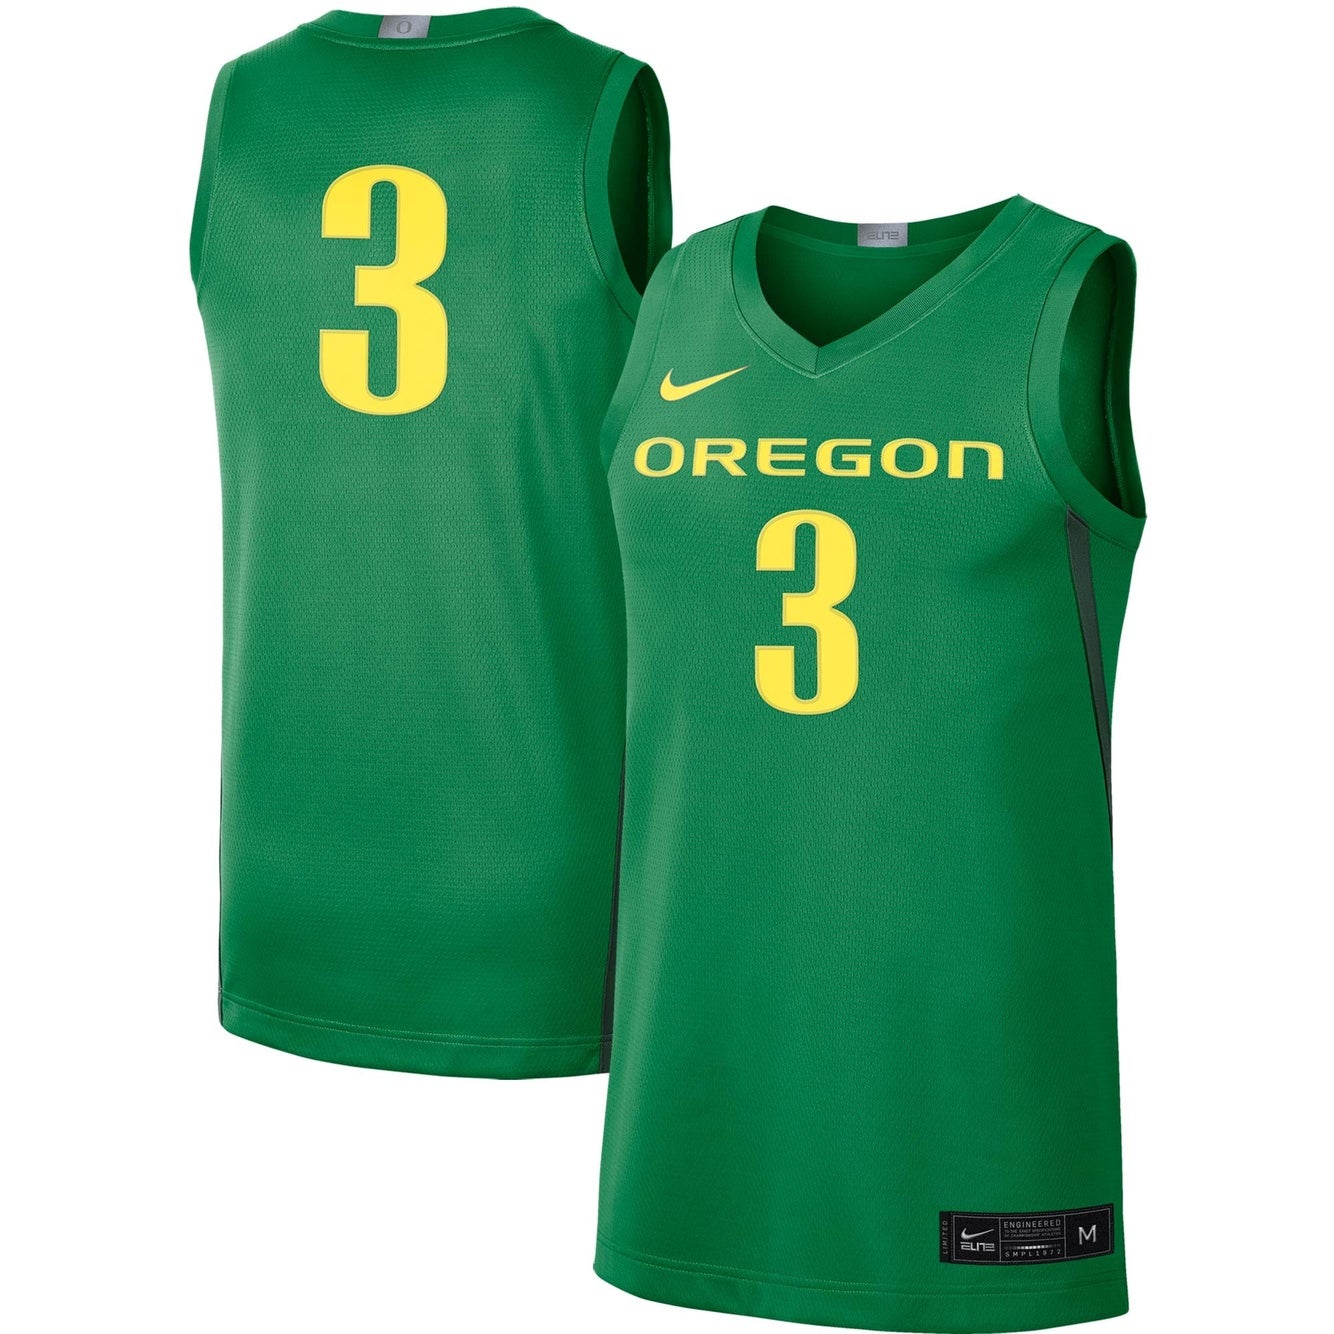 Unisex Nike #1 Green Oregon Ducks Women's Basketball Throwback Replica Jersey Size: Medium